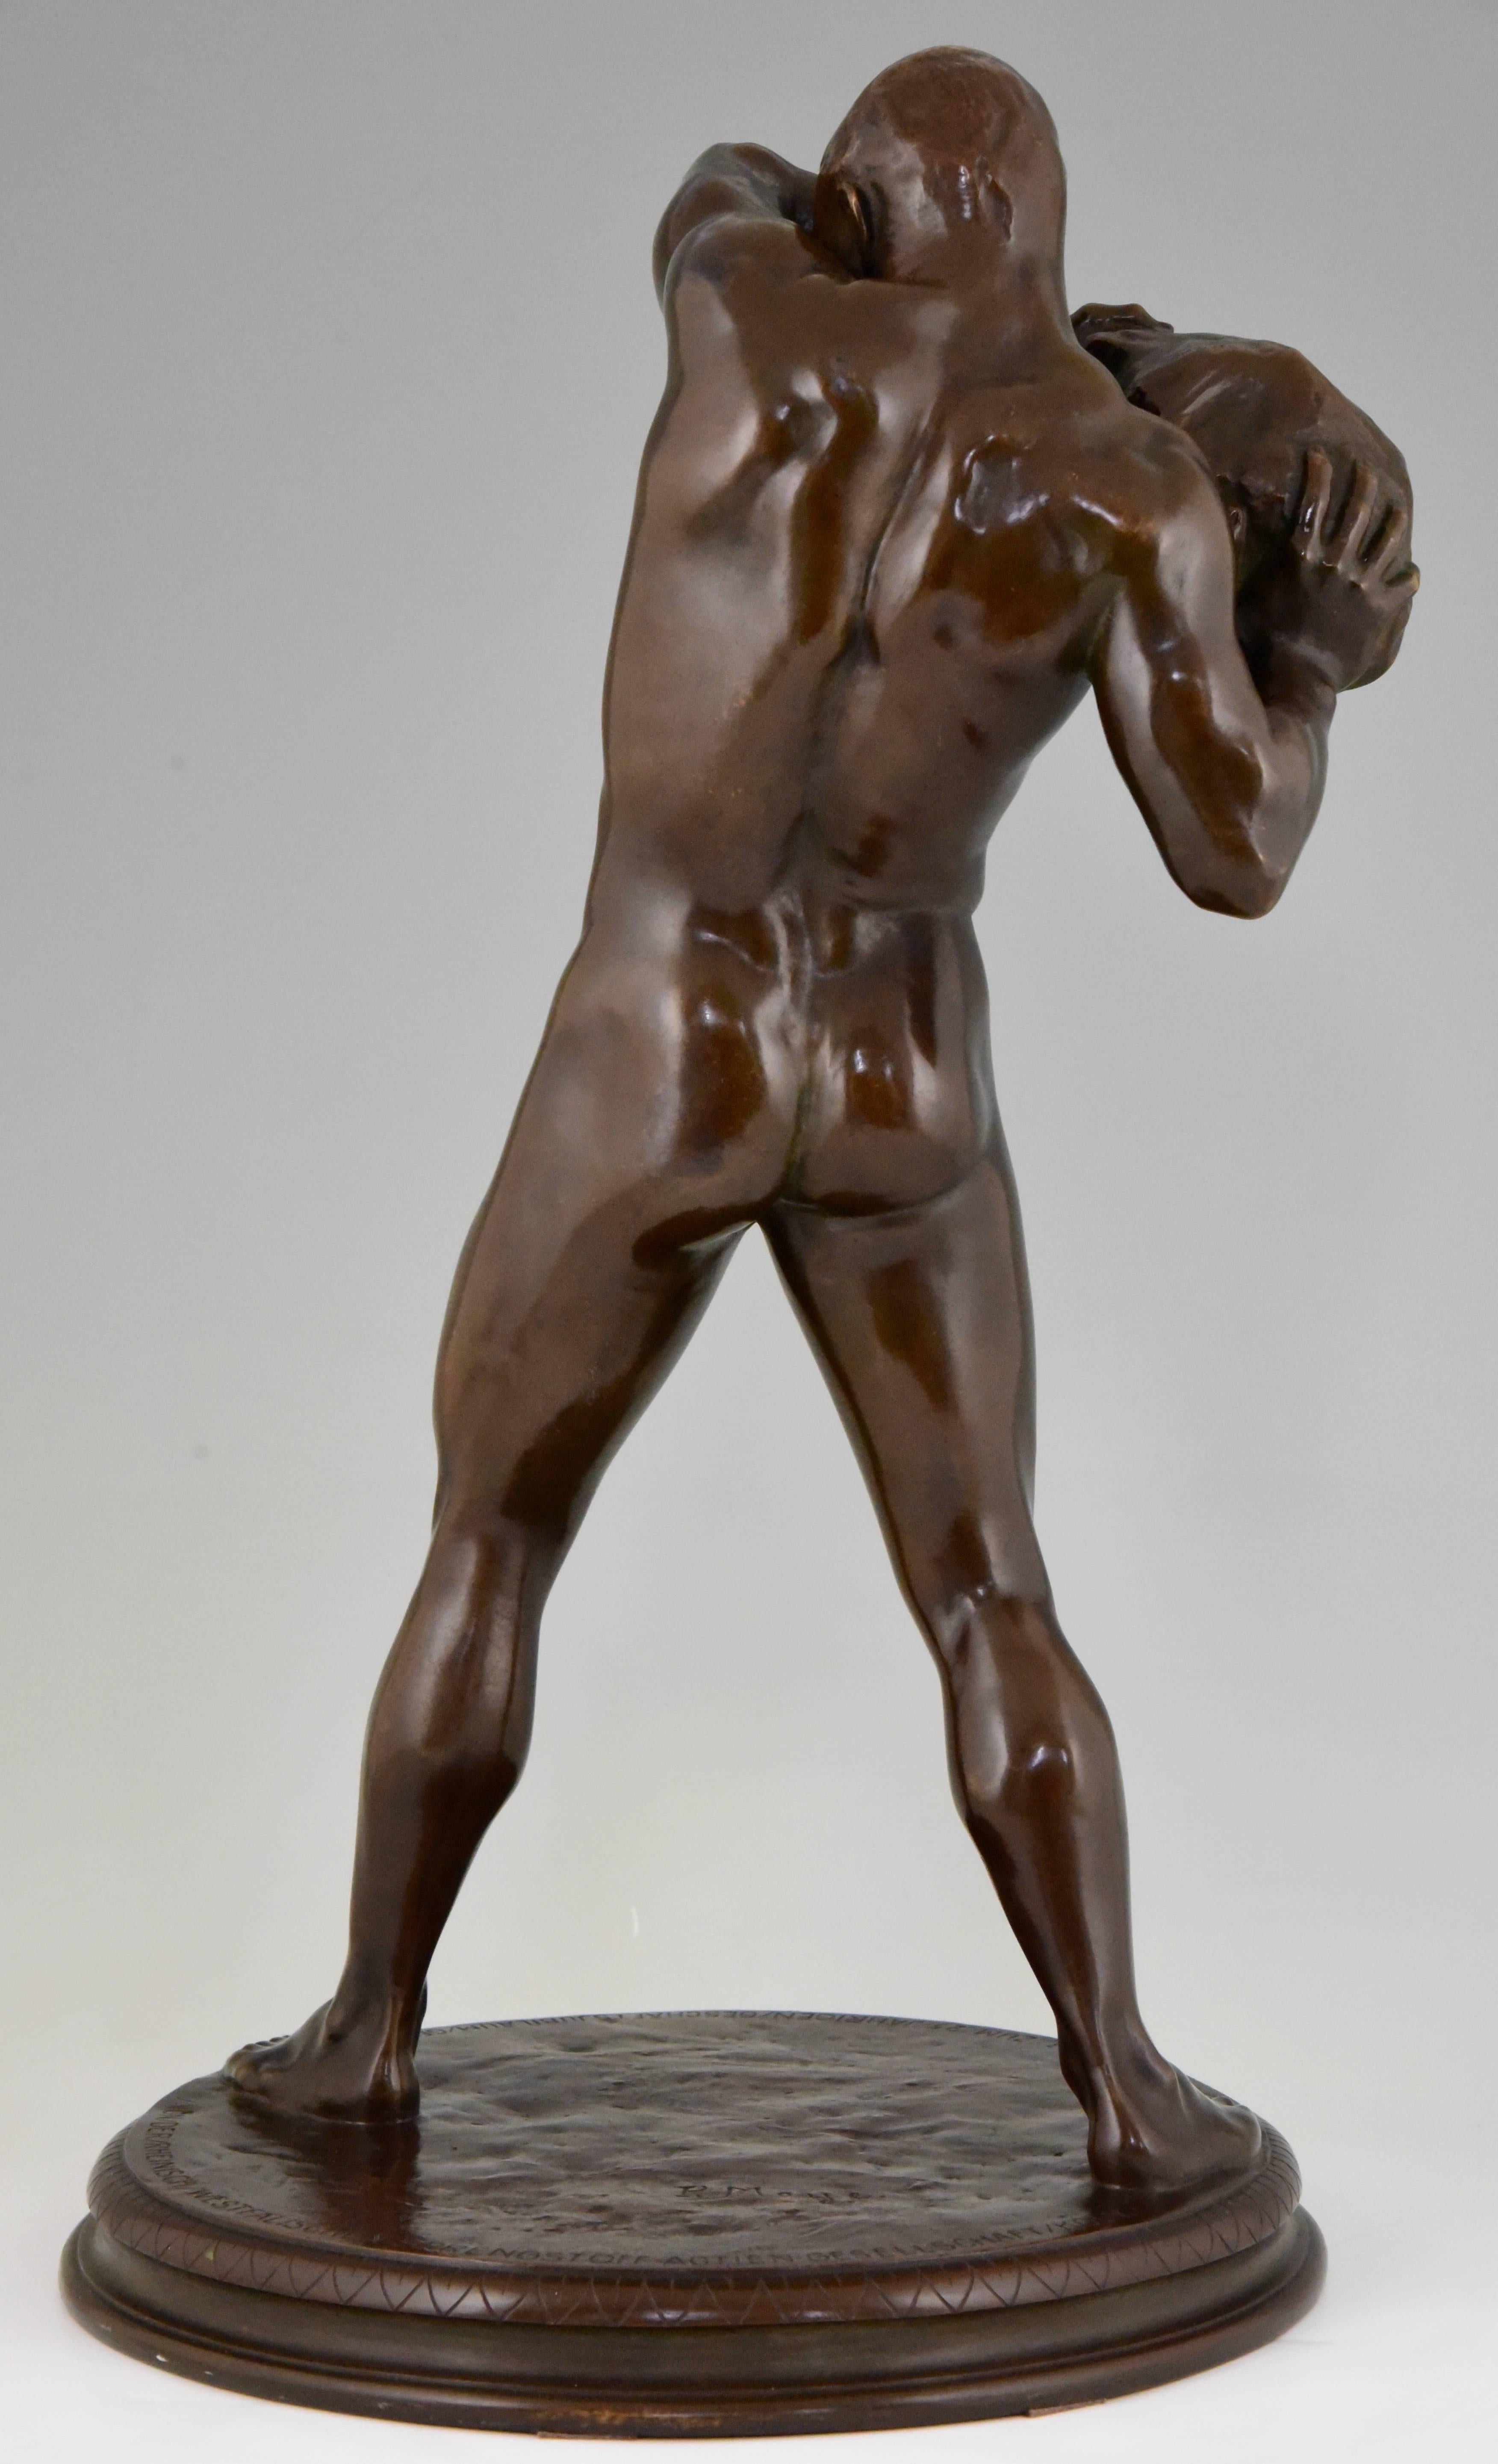 German Antique Bronze Sculpture Male Nude Athlete by Paul Moye, 1923